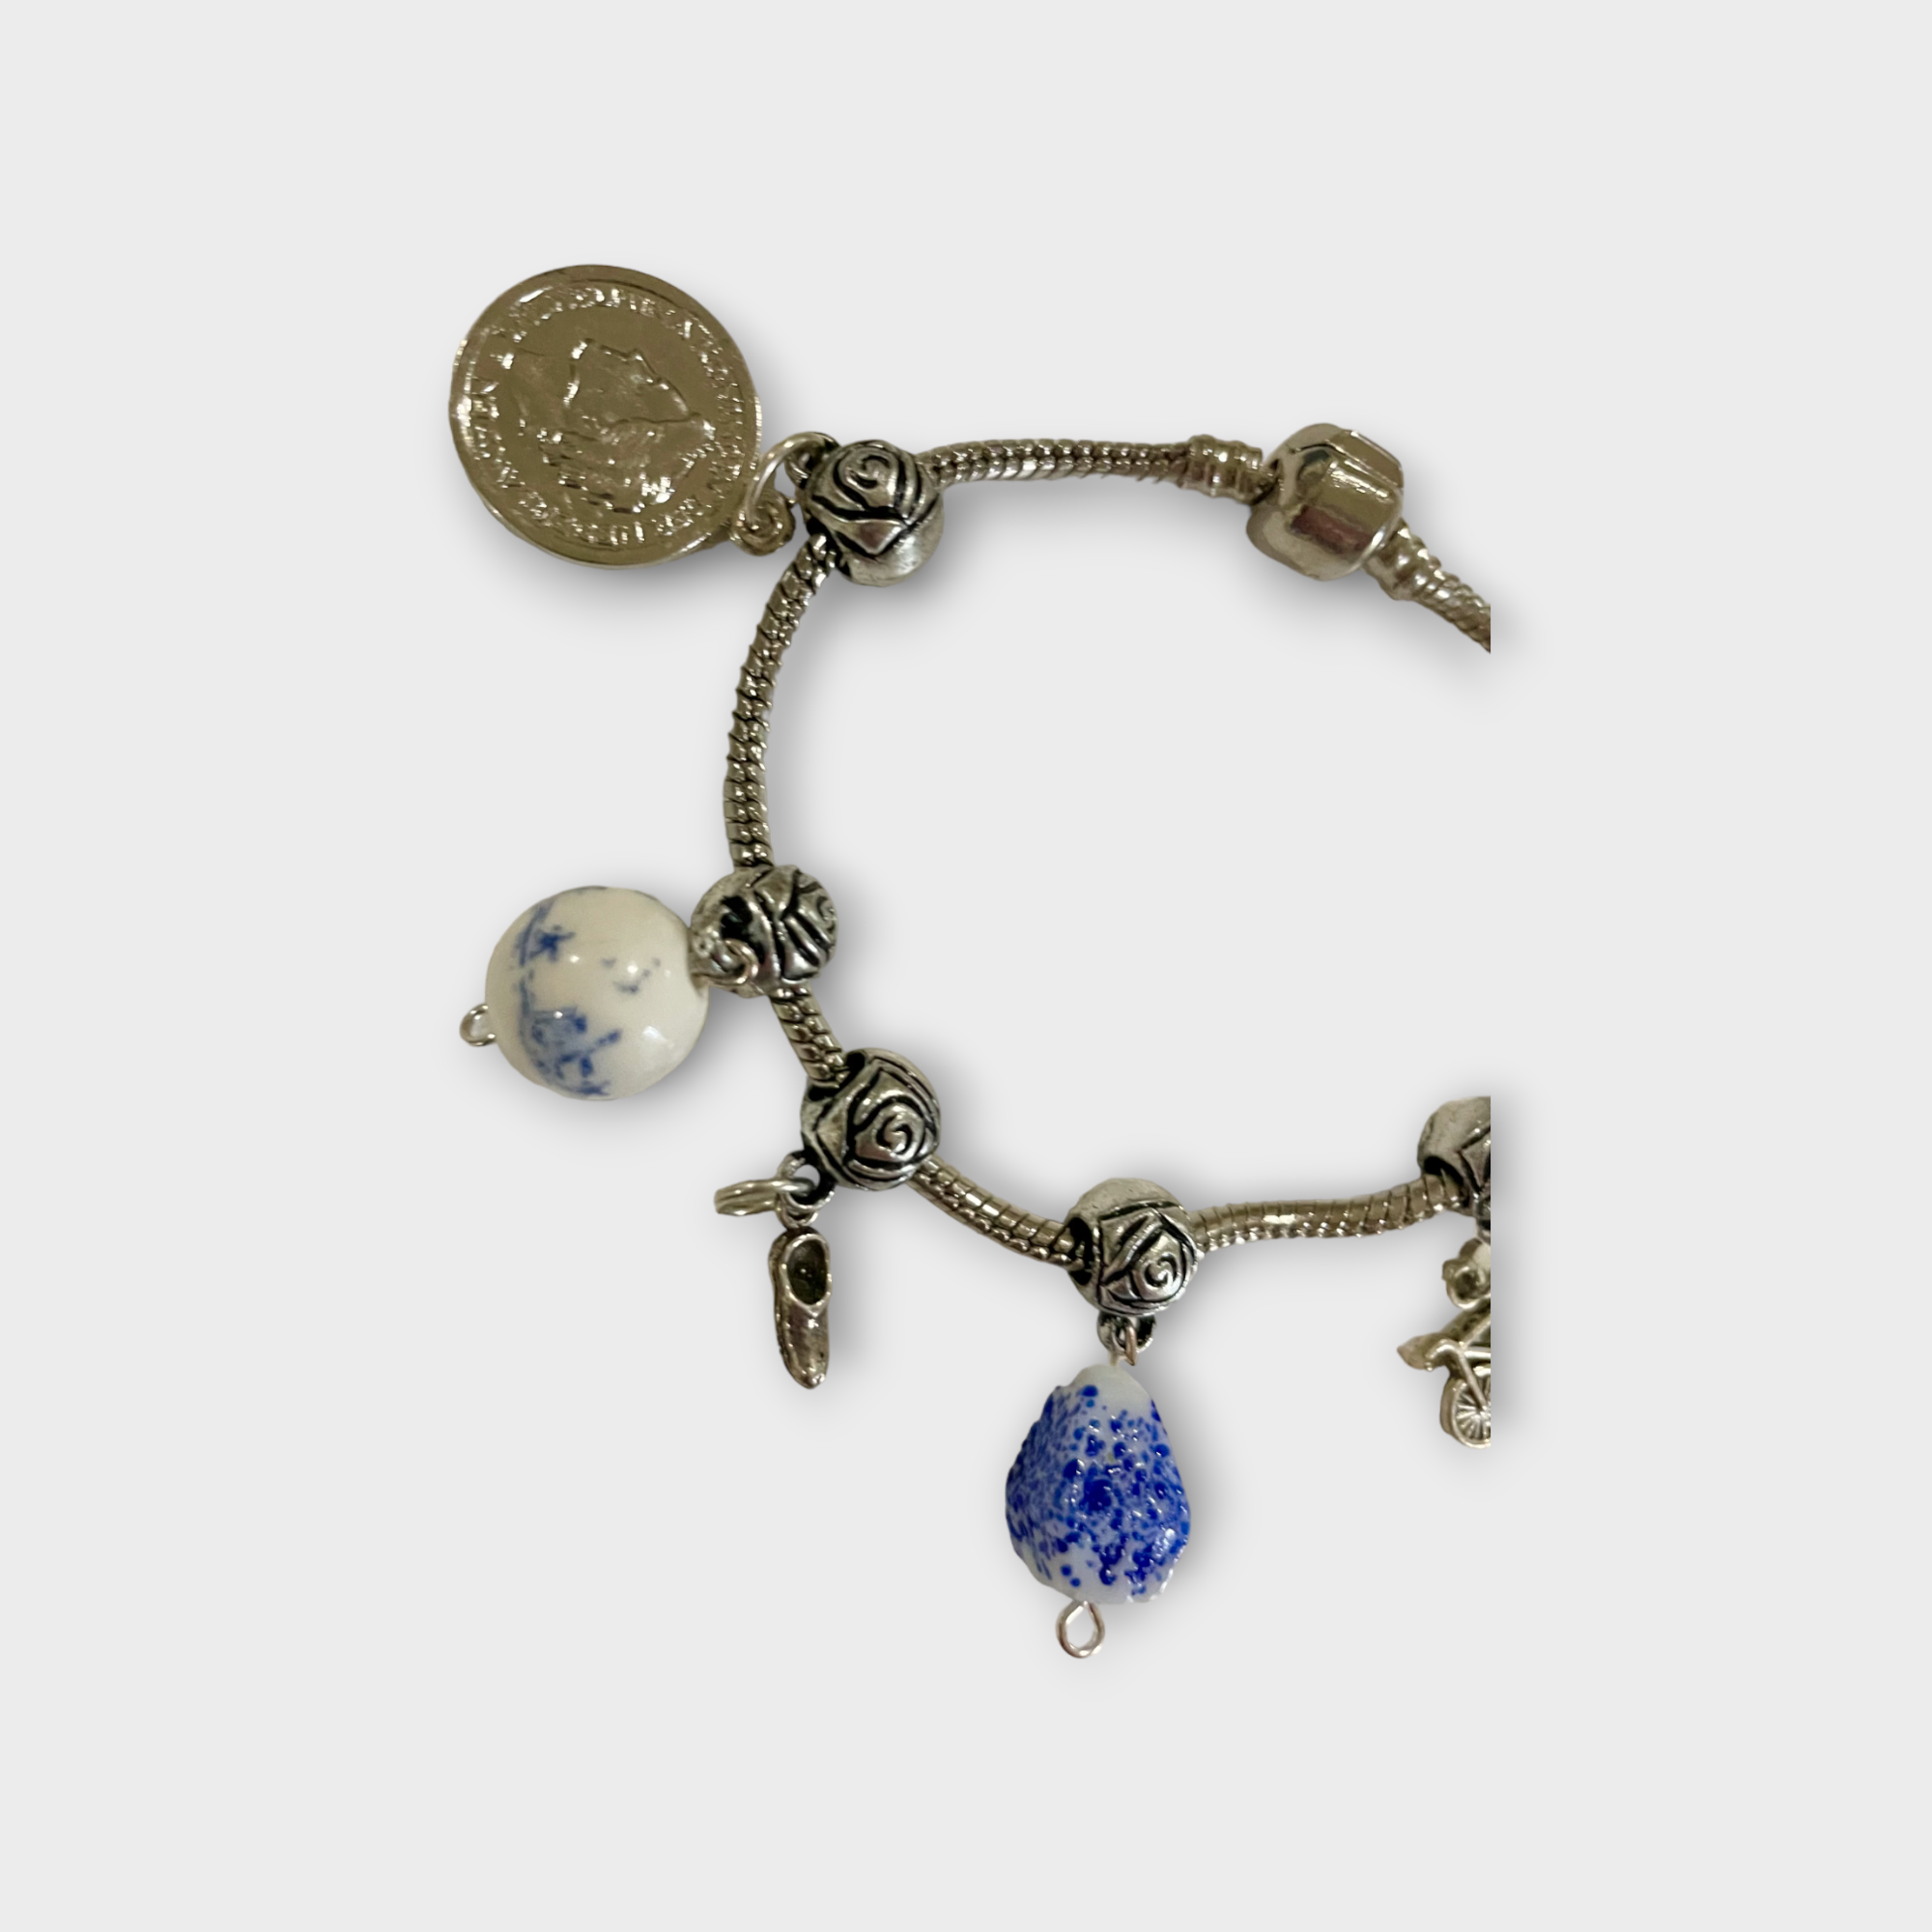 Dutch Heritage charm bracelet